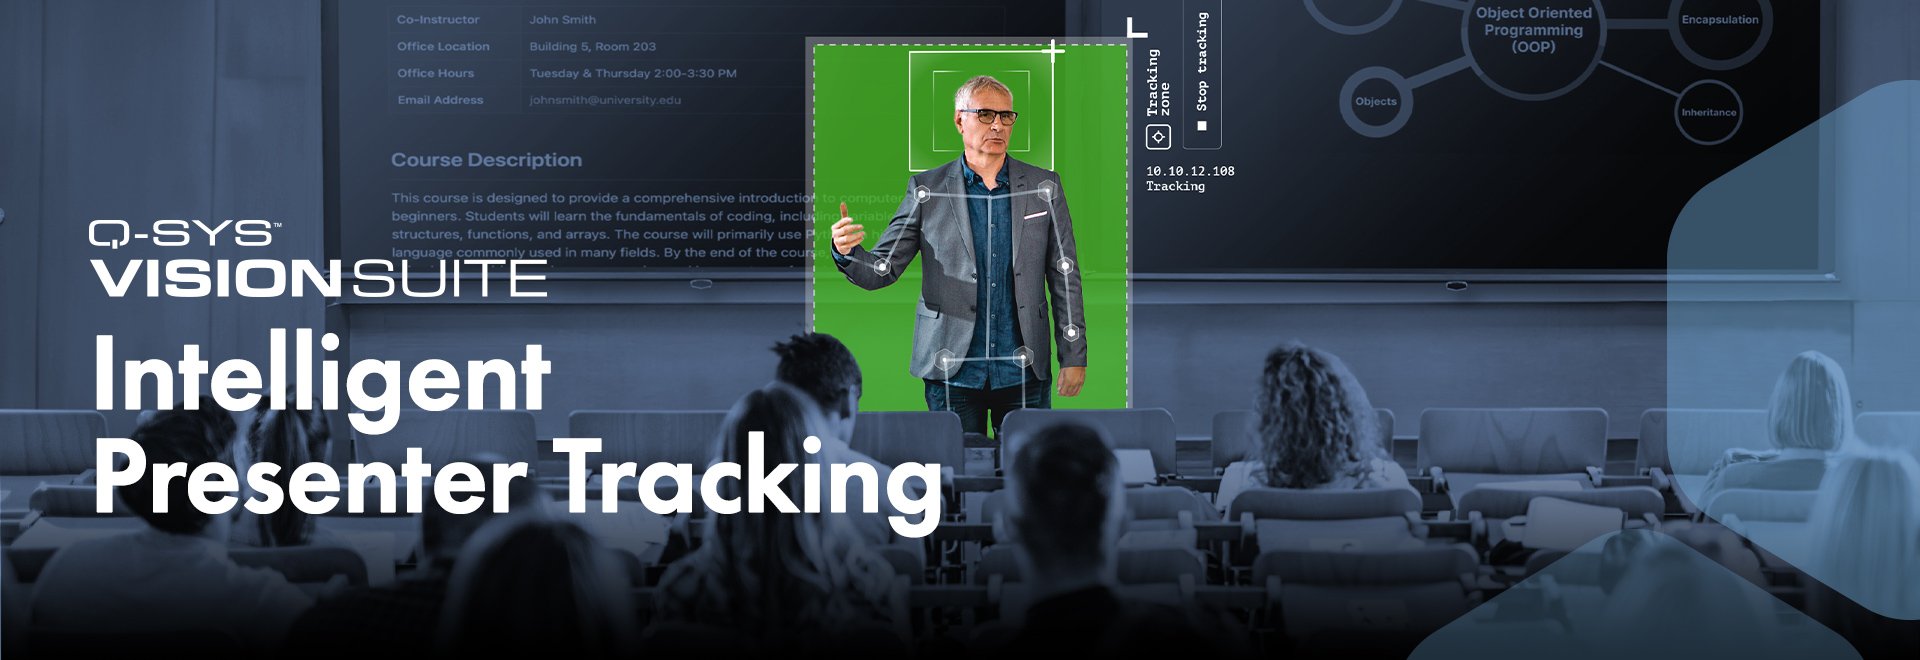 VisionSuite banner showcasing Intelligent Presenter Tracking